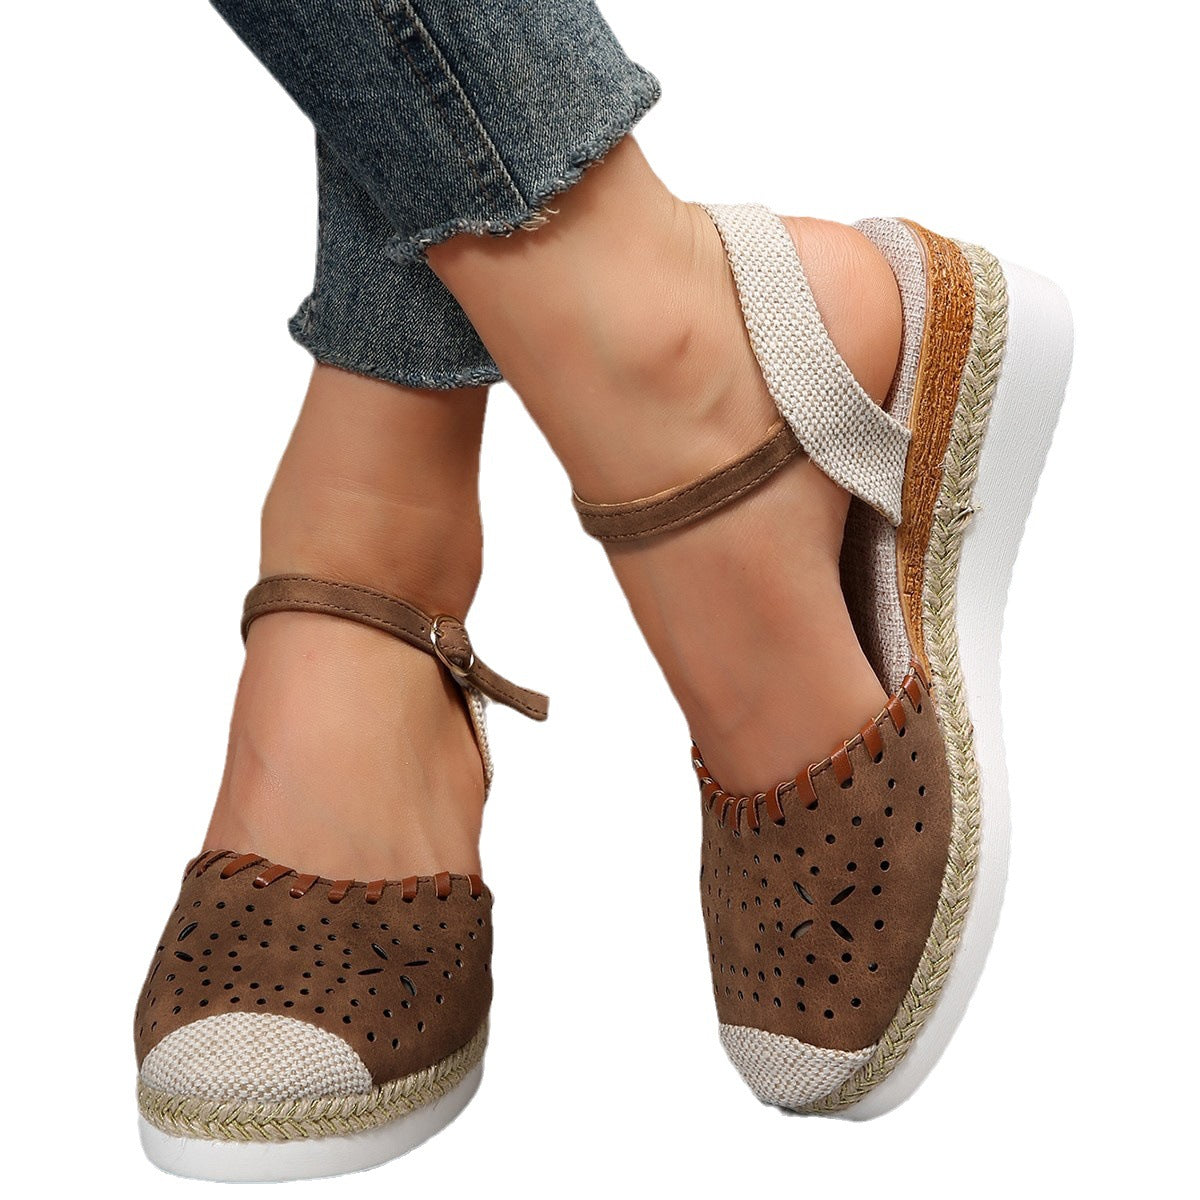 Women's Fashion Platform Casual Wedge Sandals